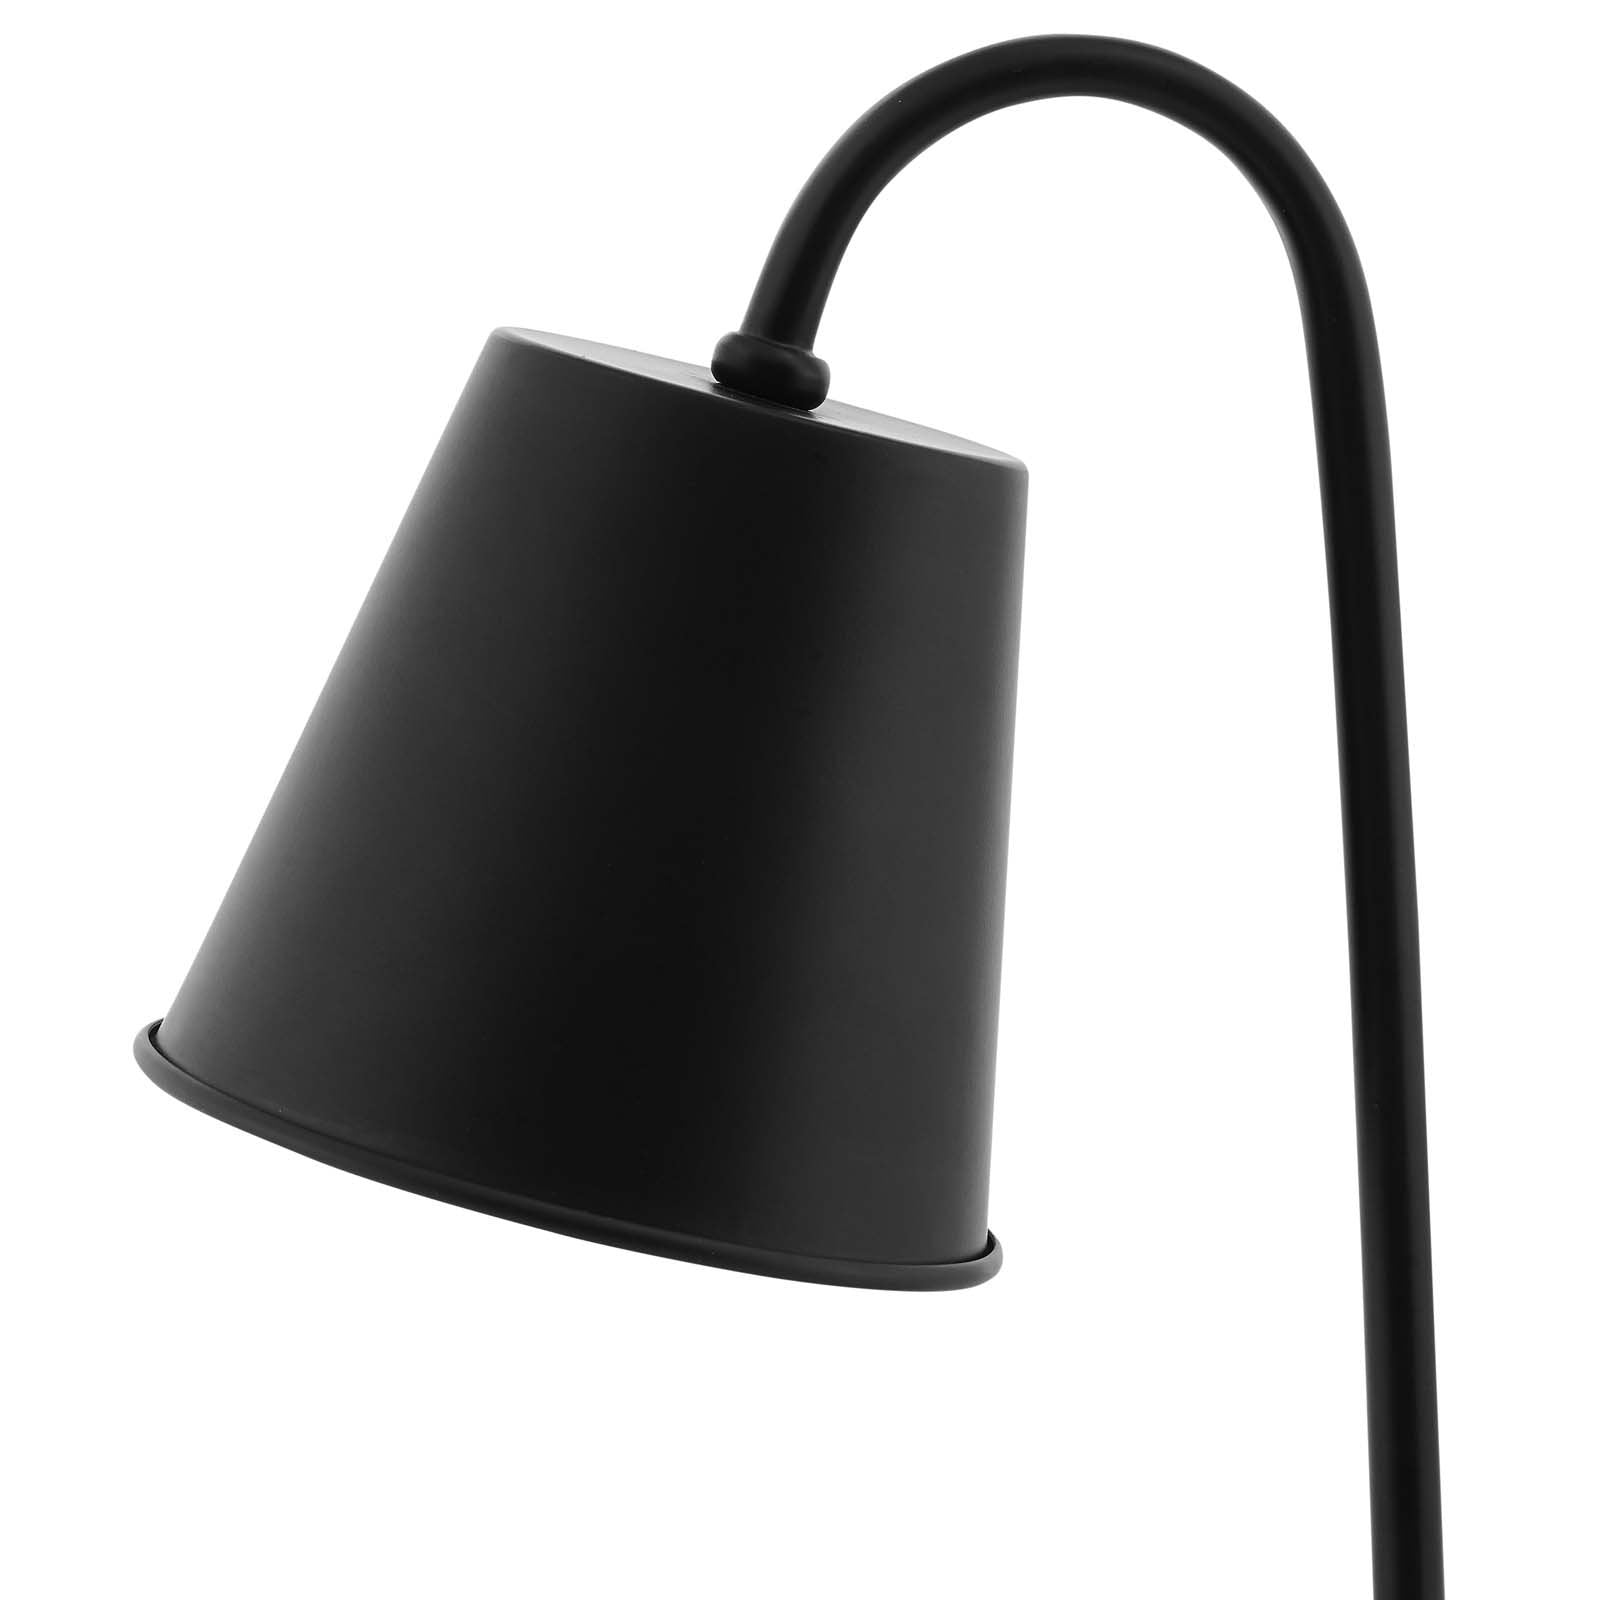 Proclaim Metal Table Lamp - East Shore Modern Home Furnishings